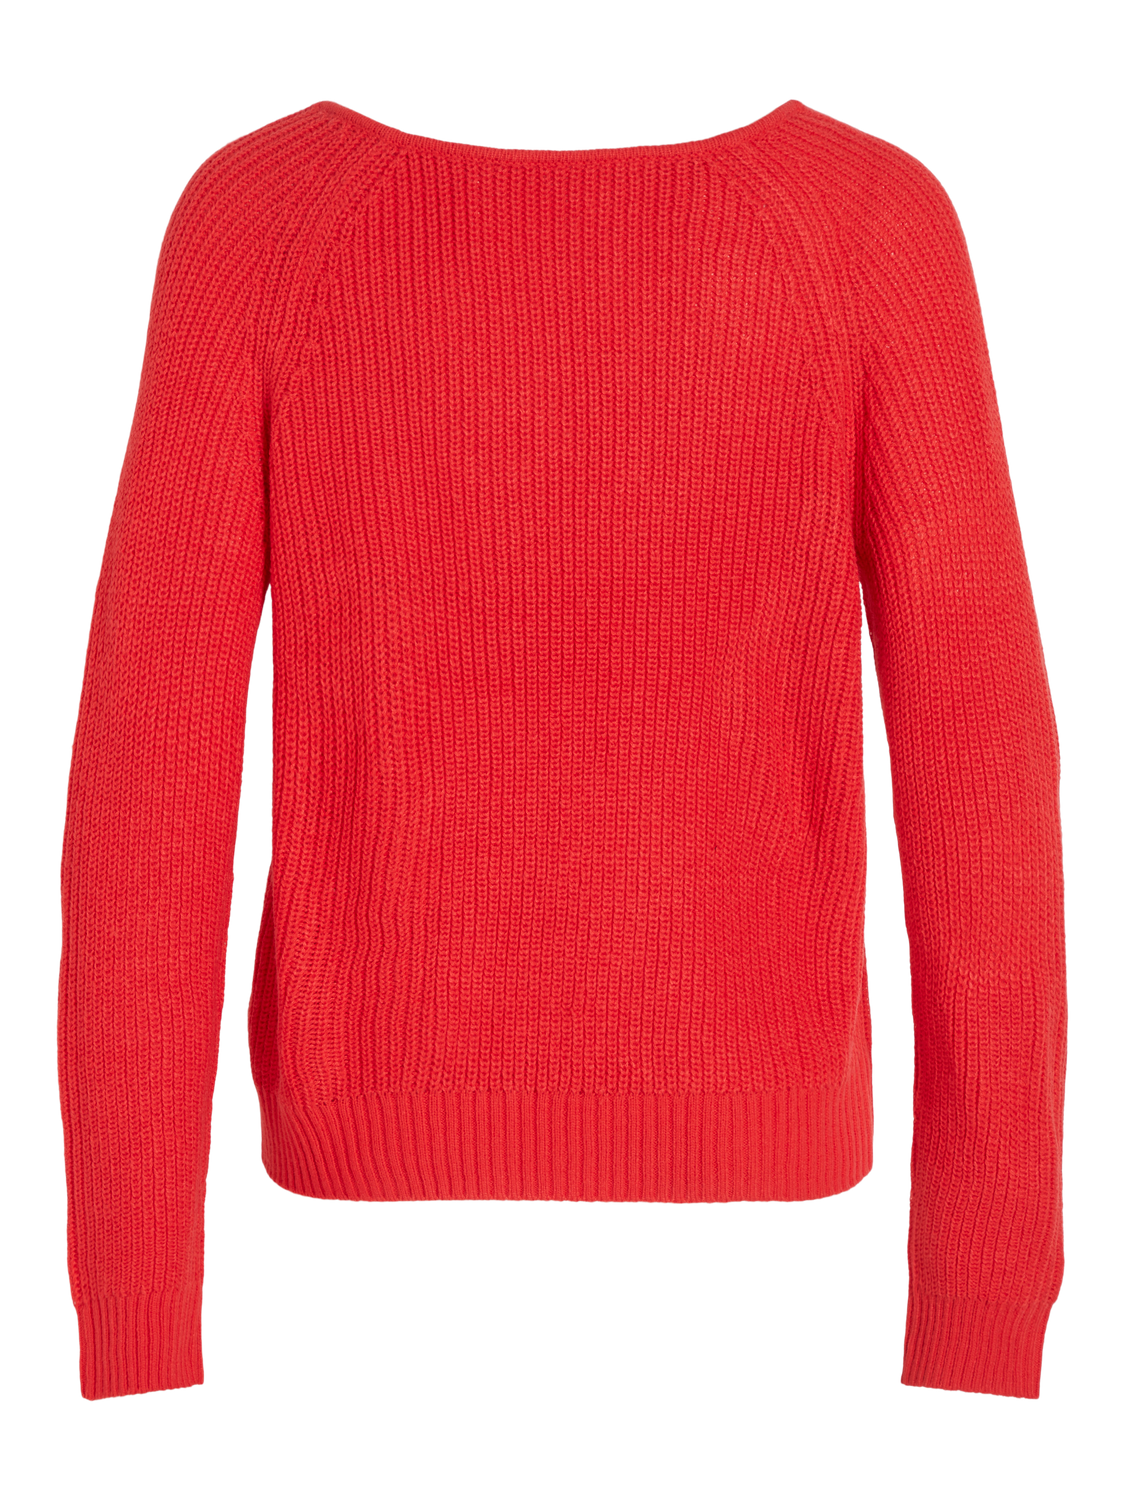 VIOA Pullover - Poppy Red